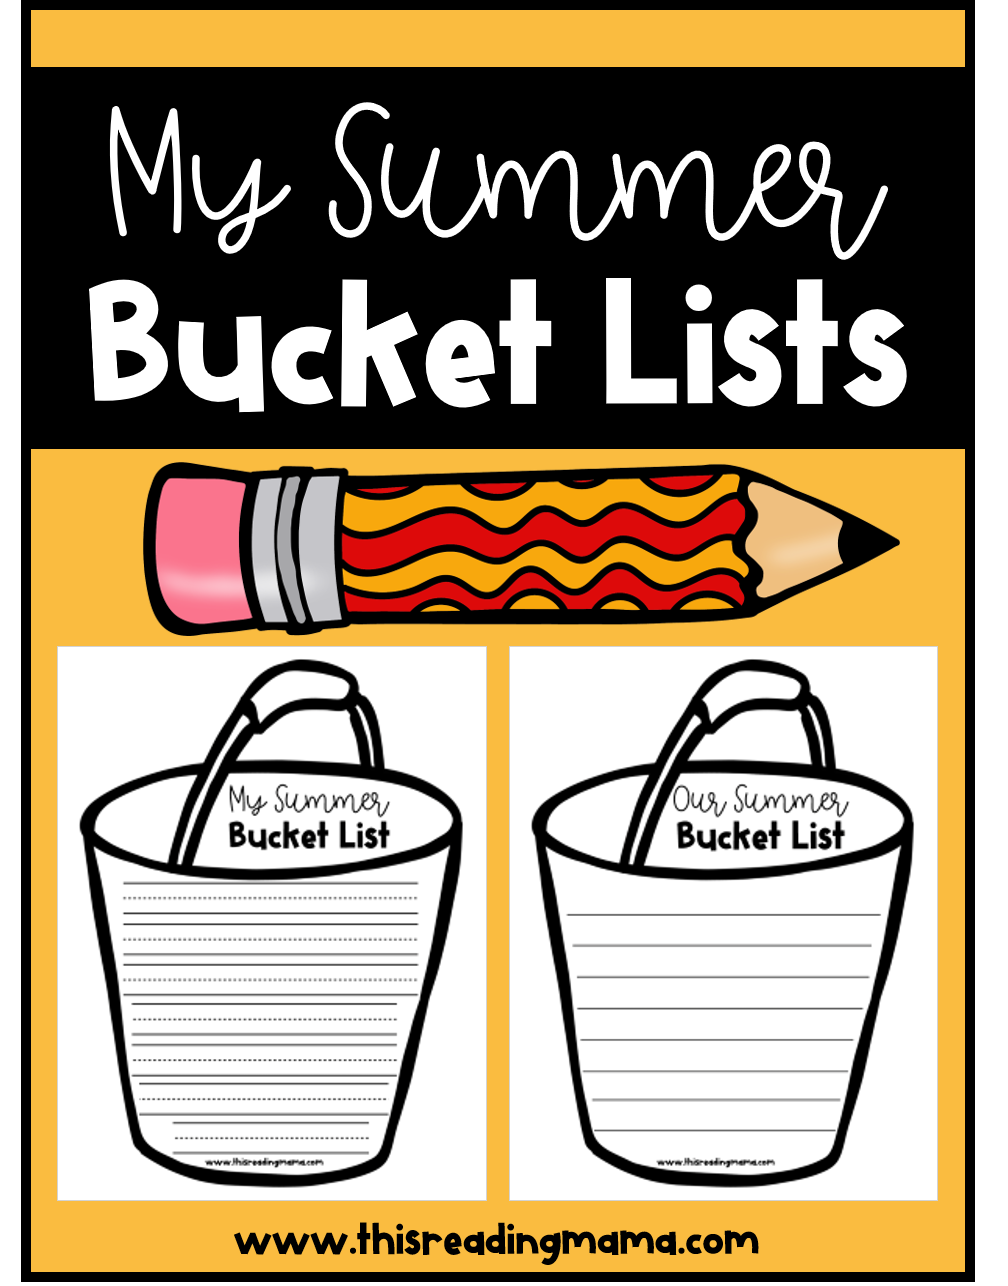 Printable Summer Bucket List for Kids